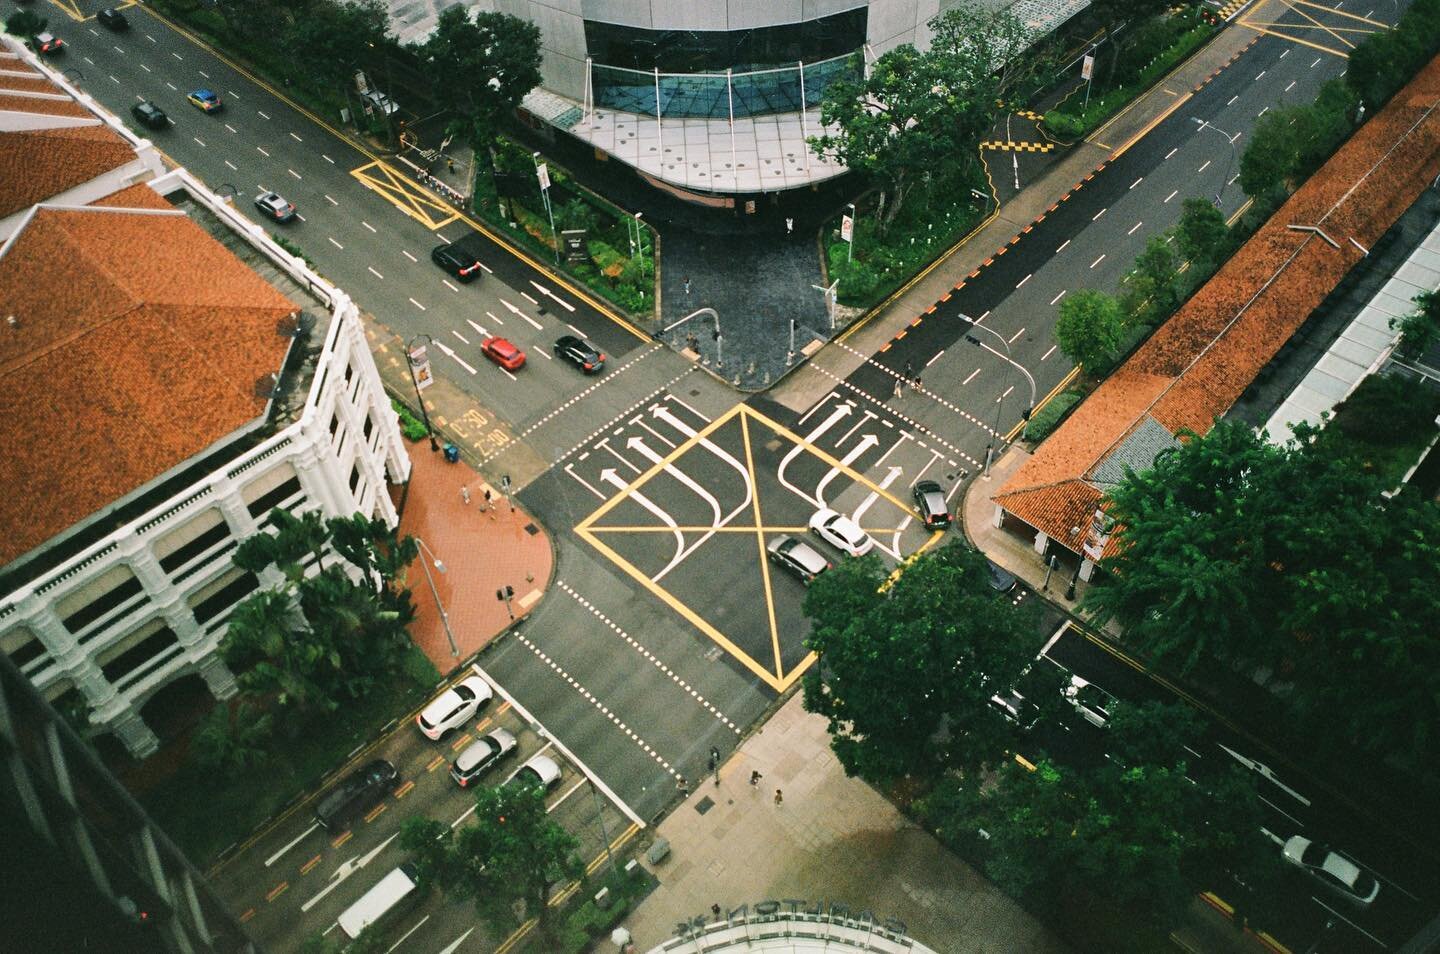 Singapore in a few frames.
#portra400 on #contaxg2
Lab: @colourdigitalphotolab